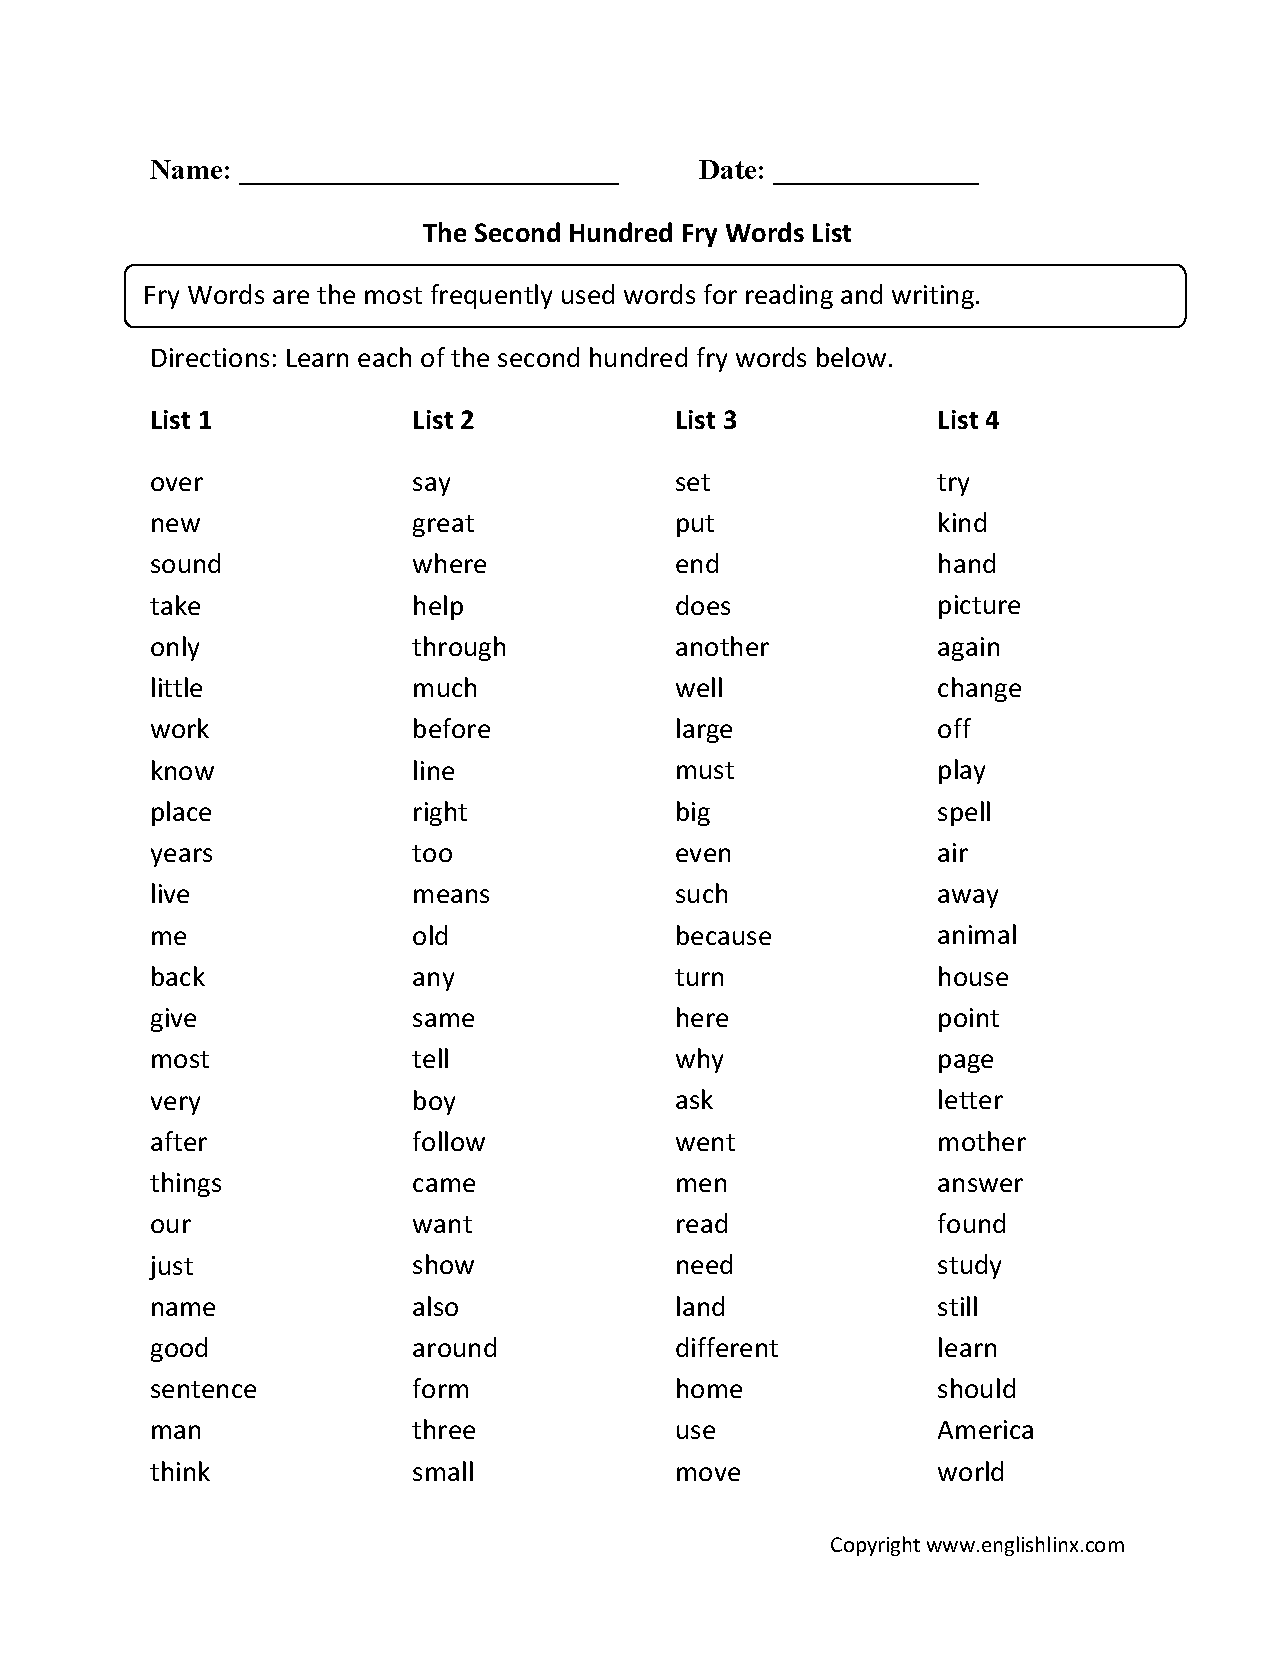 Second Hundred Fry Words List Worksheets